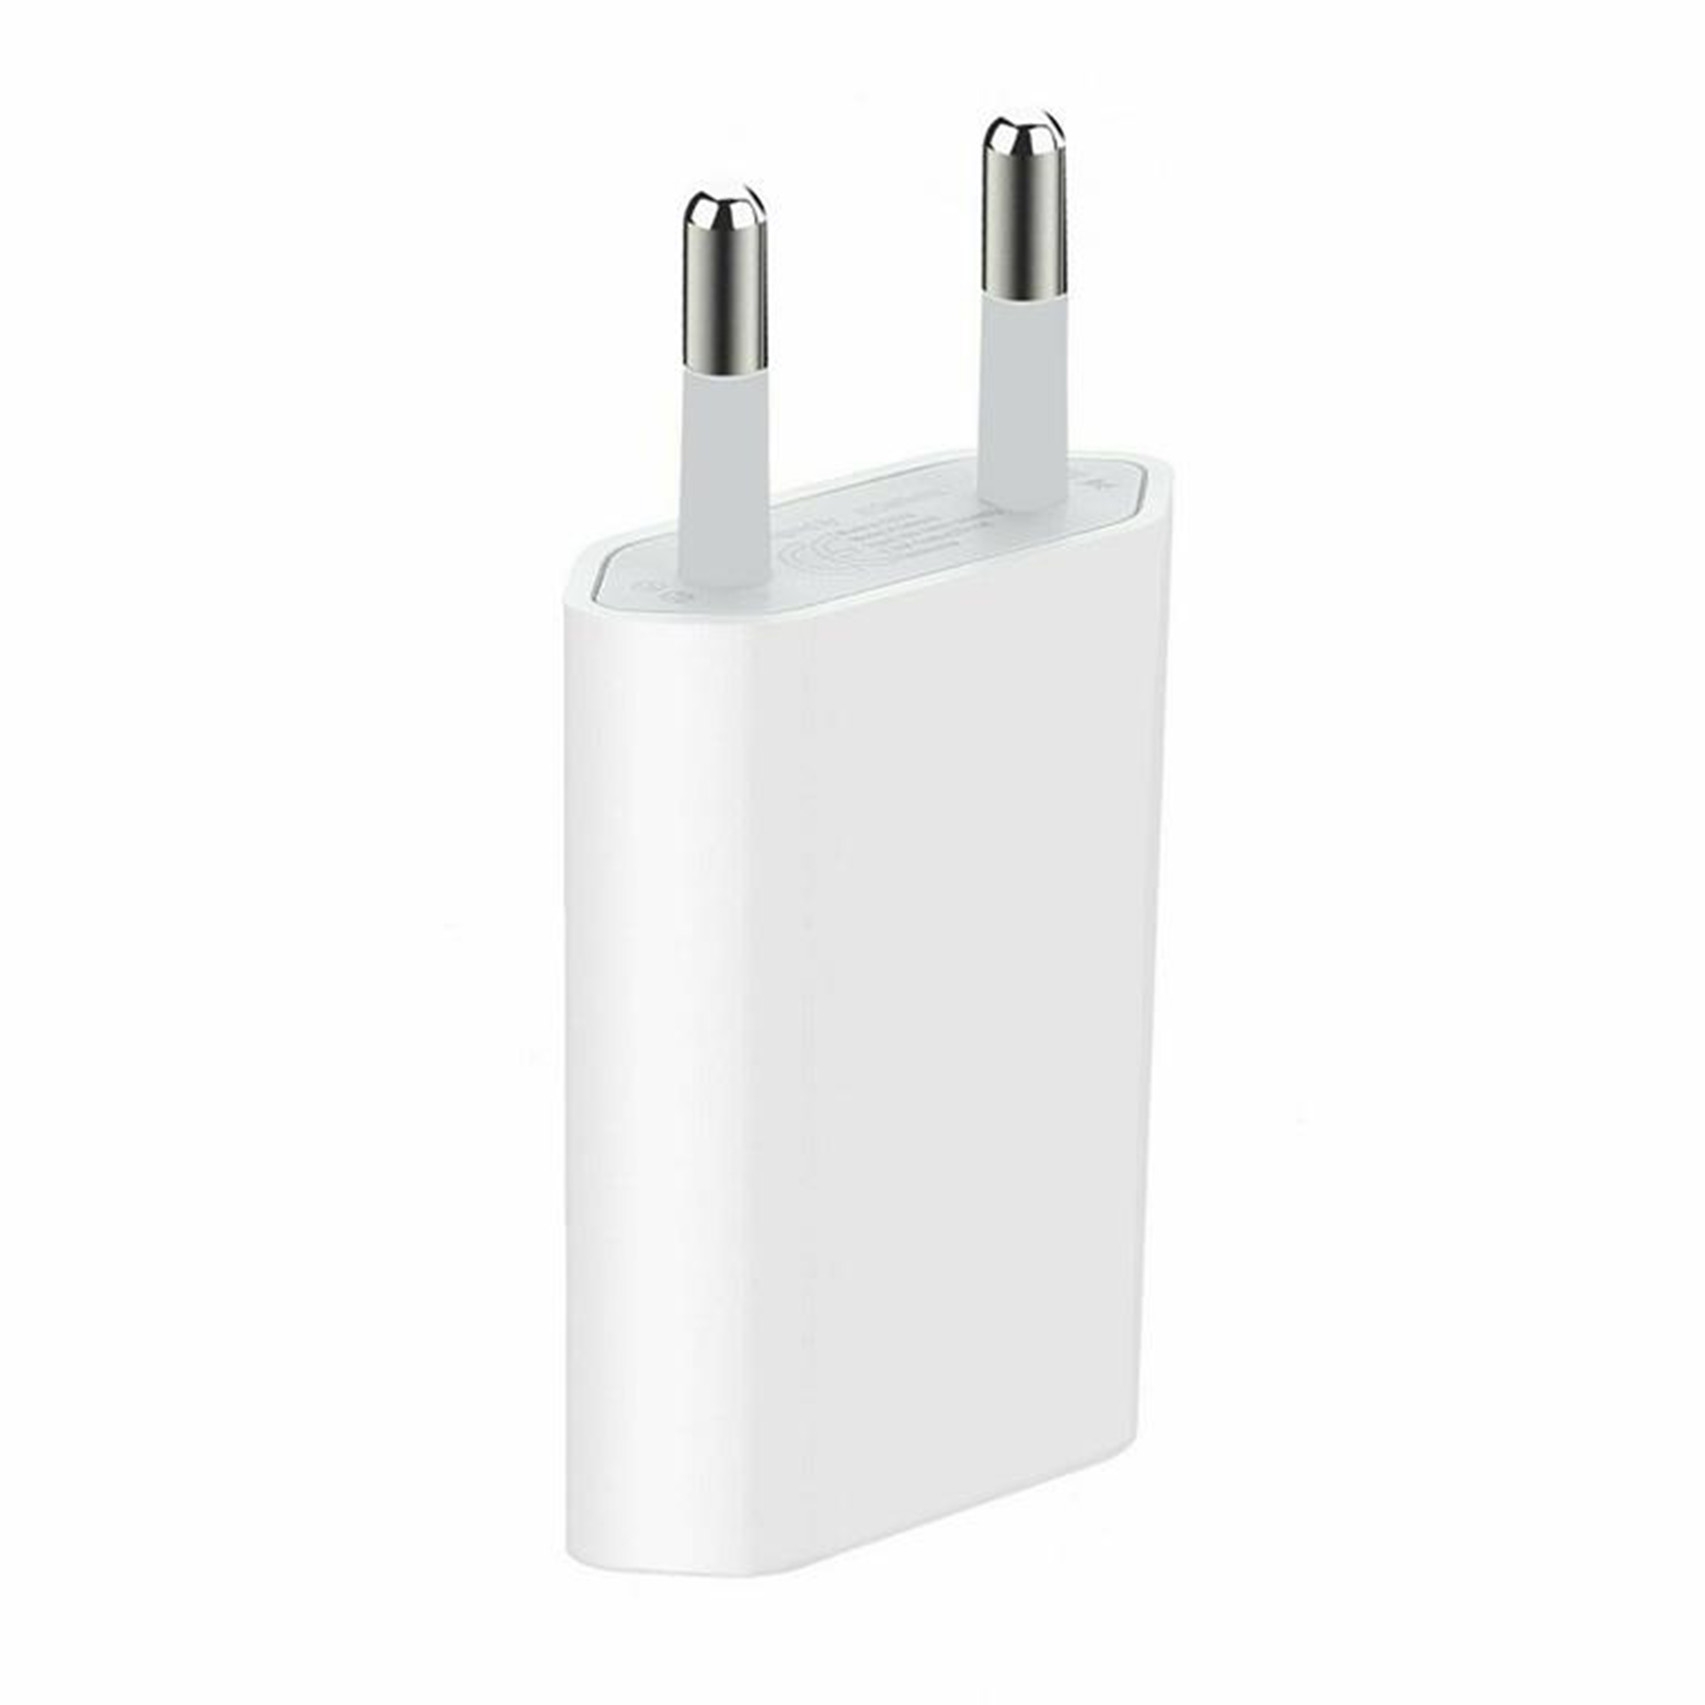 iPhone 6s Plus 5W USB Power Adapter